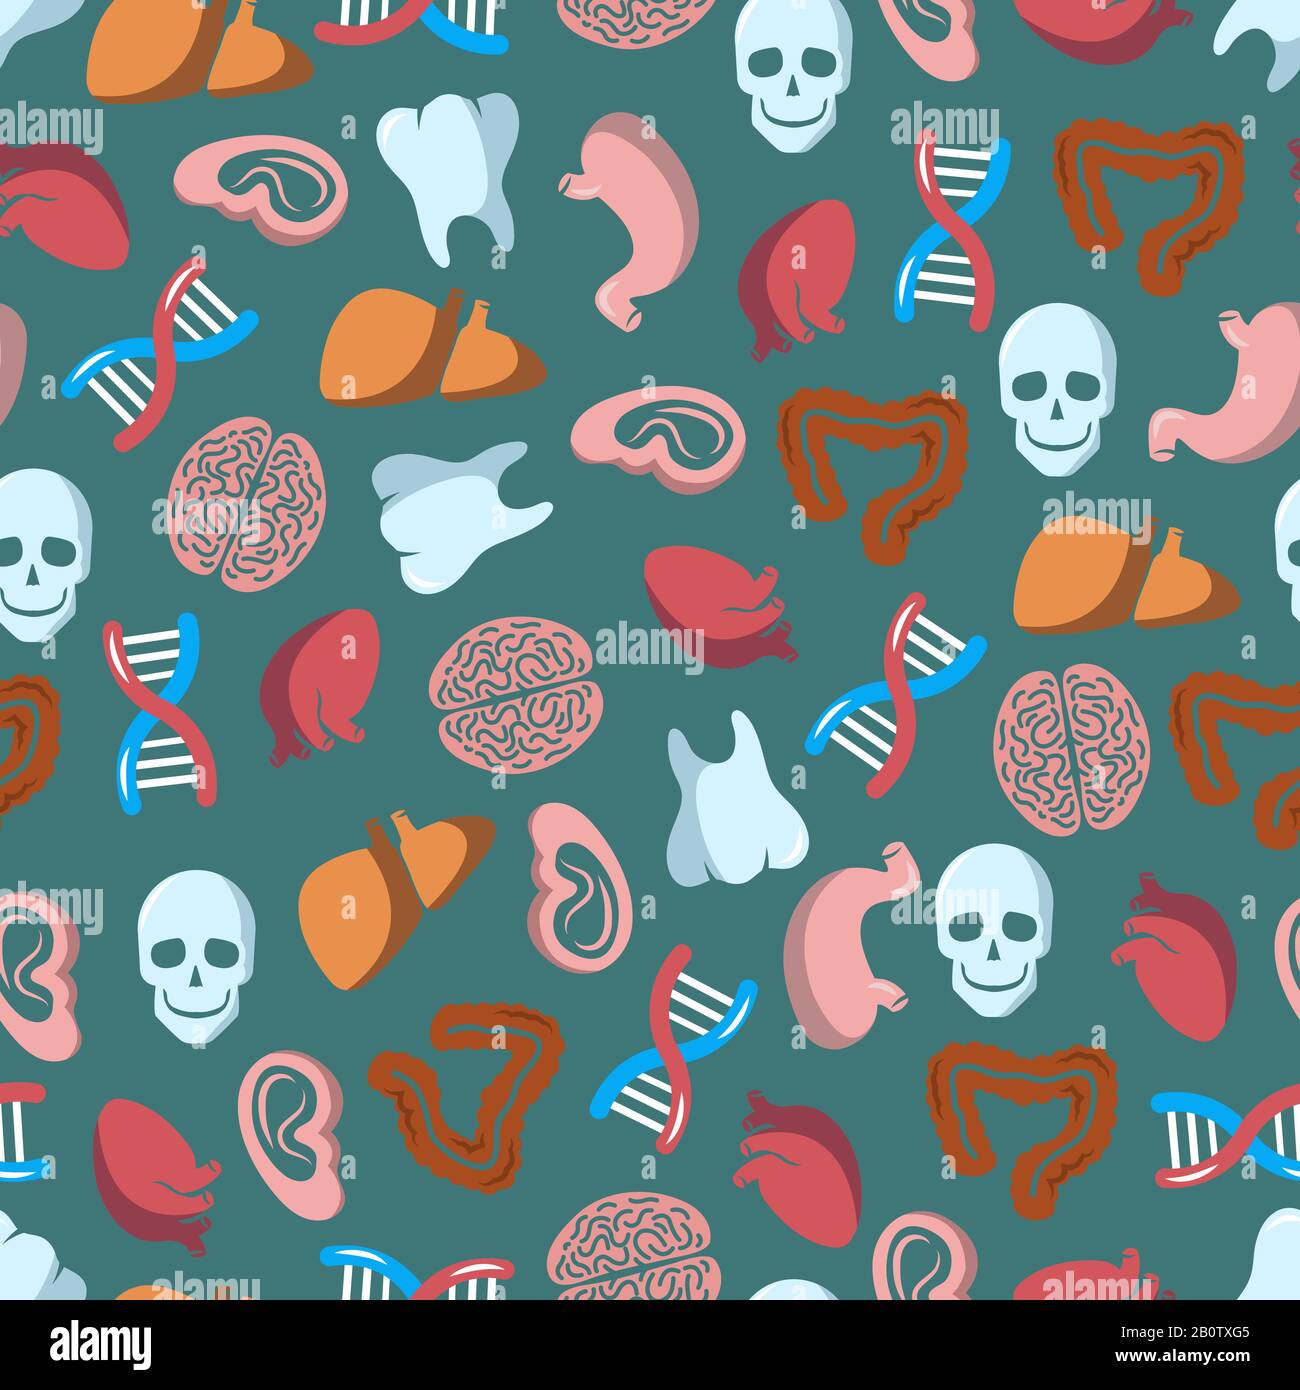 Internal human organs seamless pattern. Anatomy biology medicine